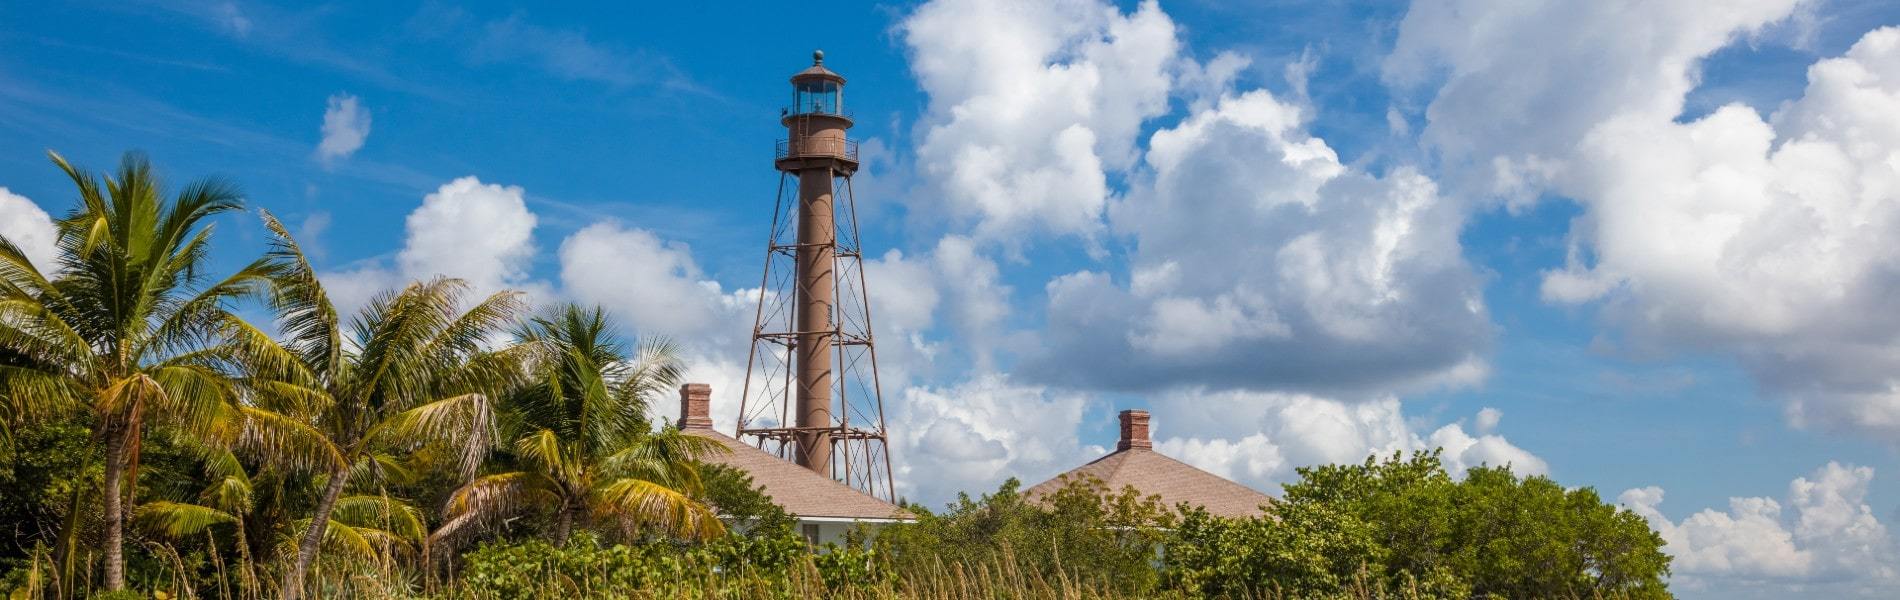 historic lighthouse on the beach of sanibel island in sw florida